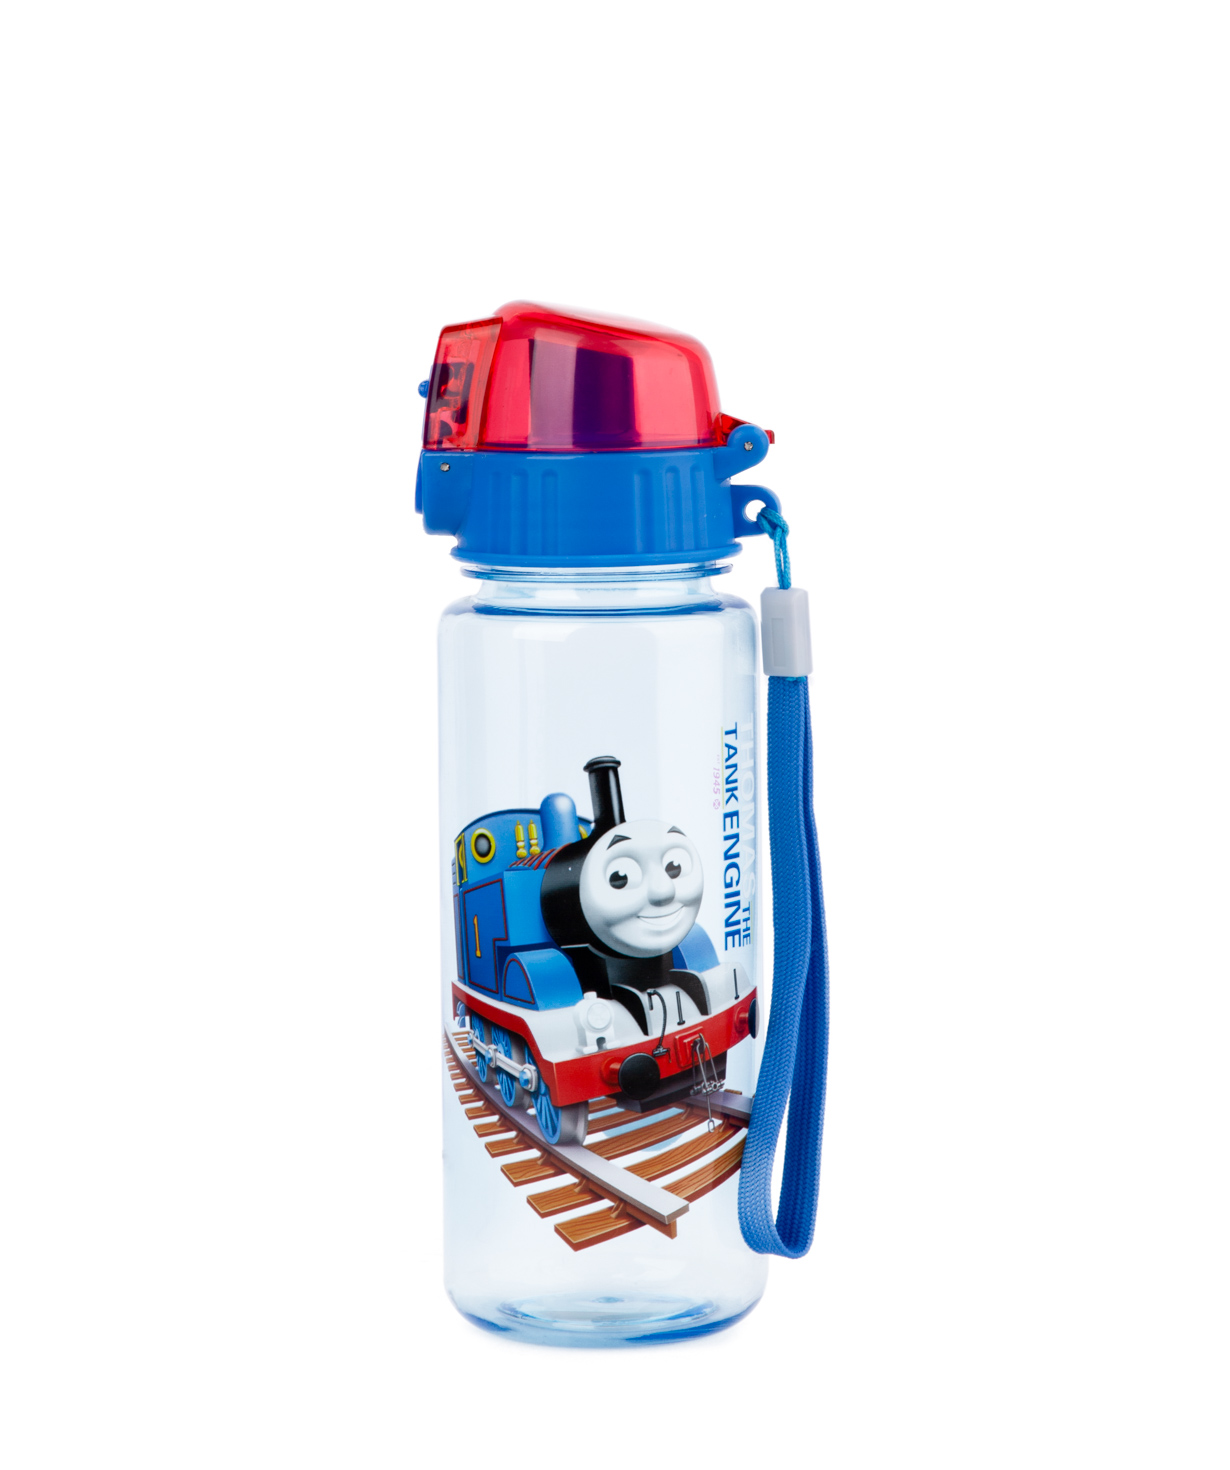 Bottle PE-5925 for water, plastic